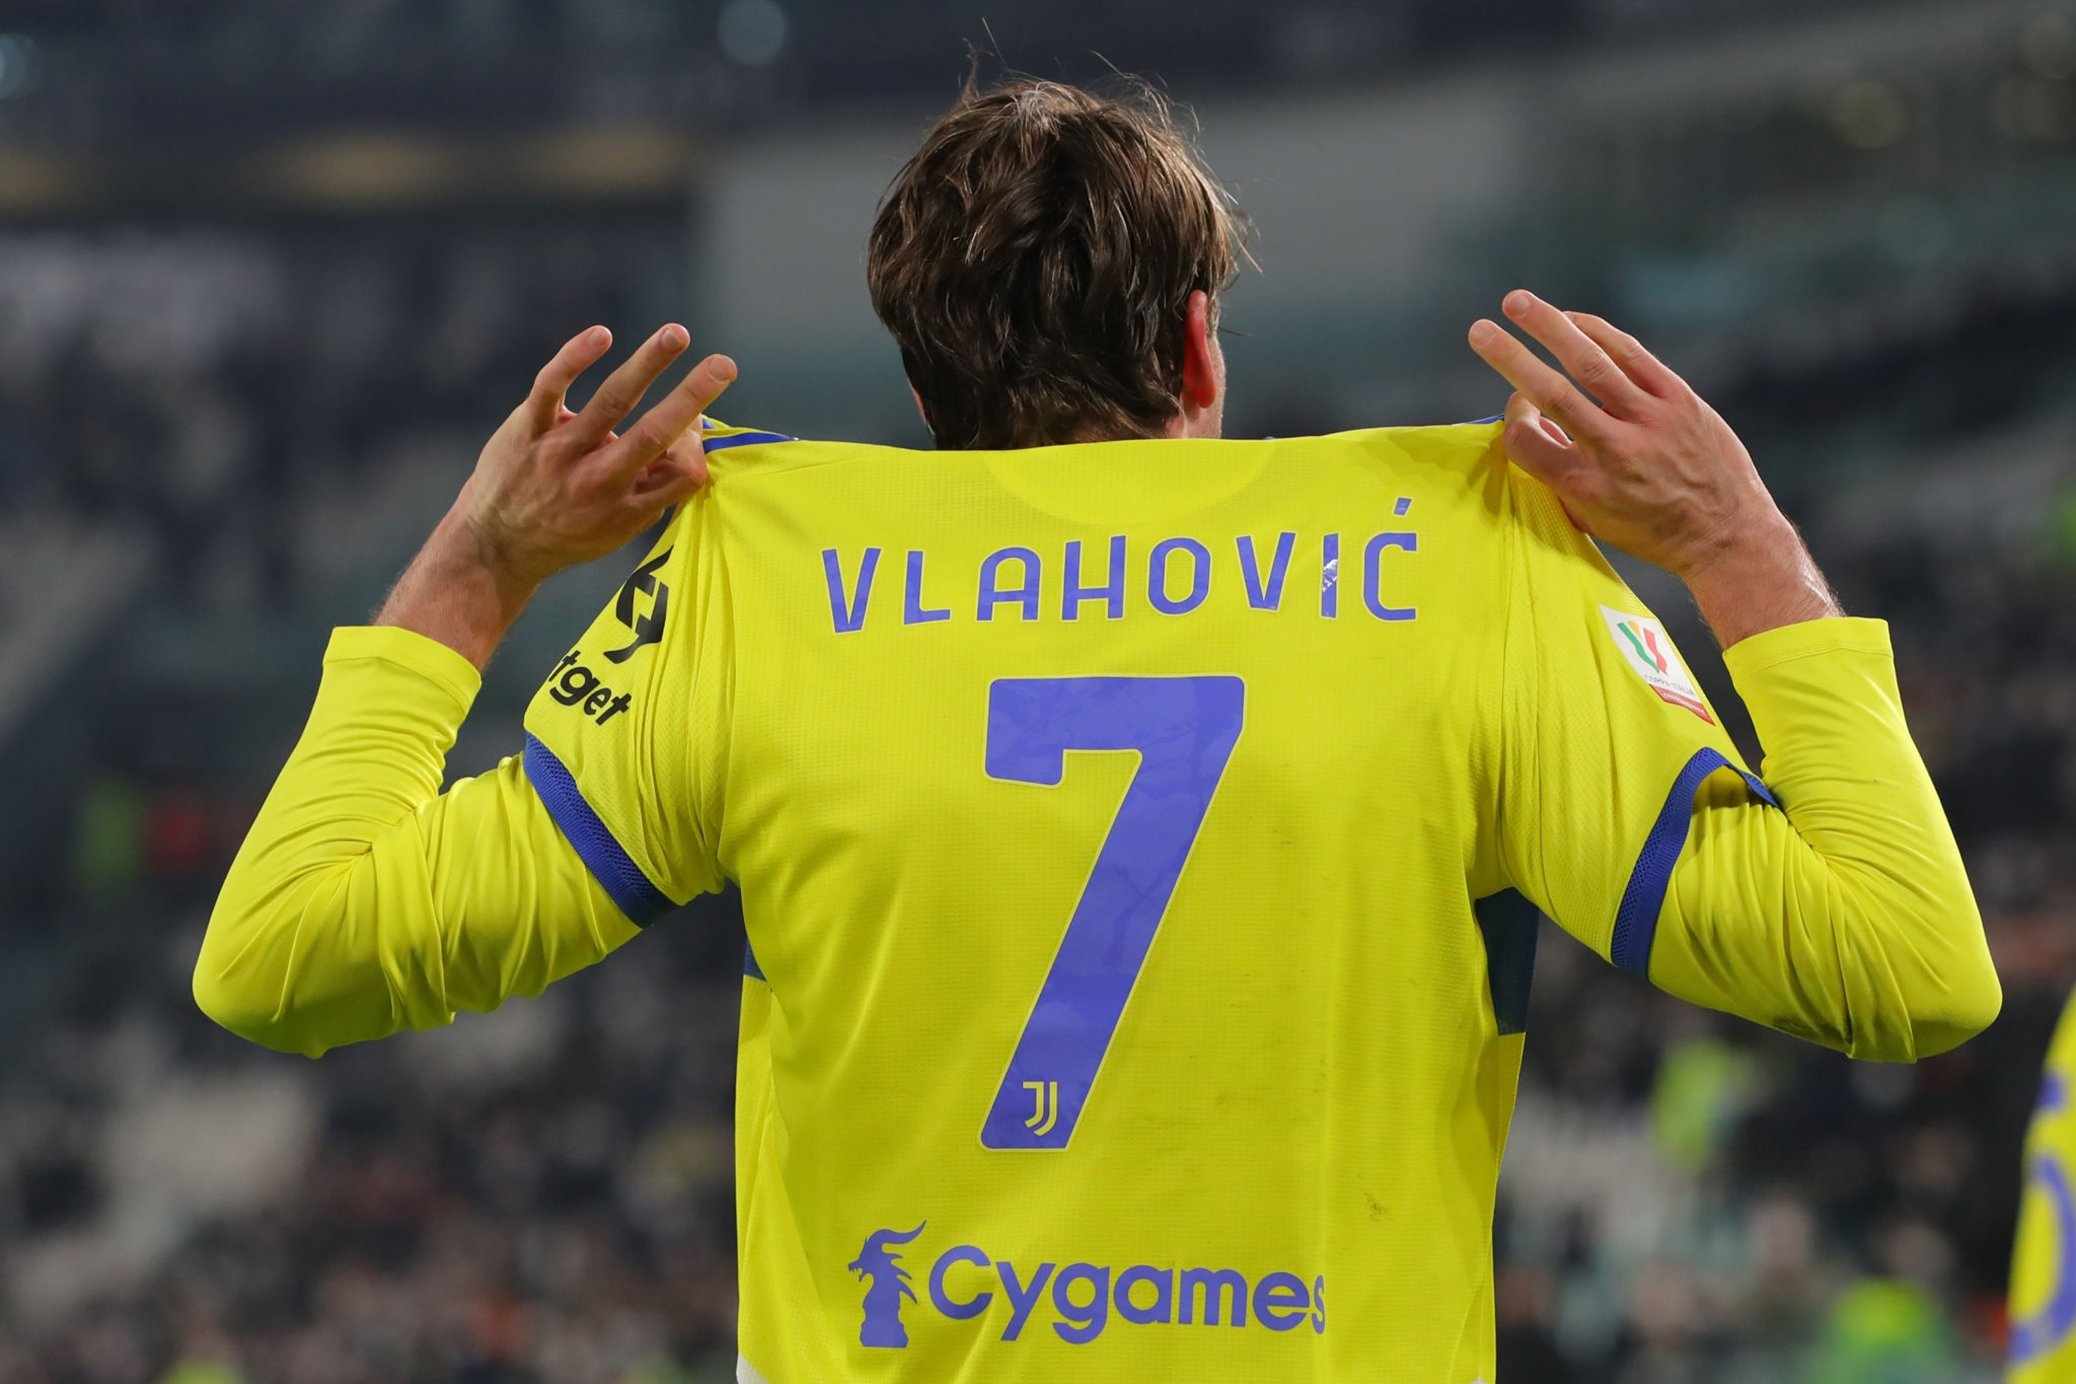 Juve-Sassuolo: Vlahovic & Perin saving the nearly unfortunate match